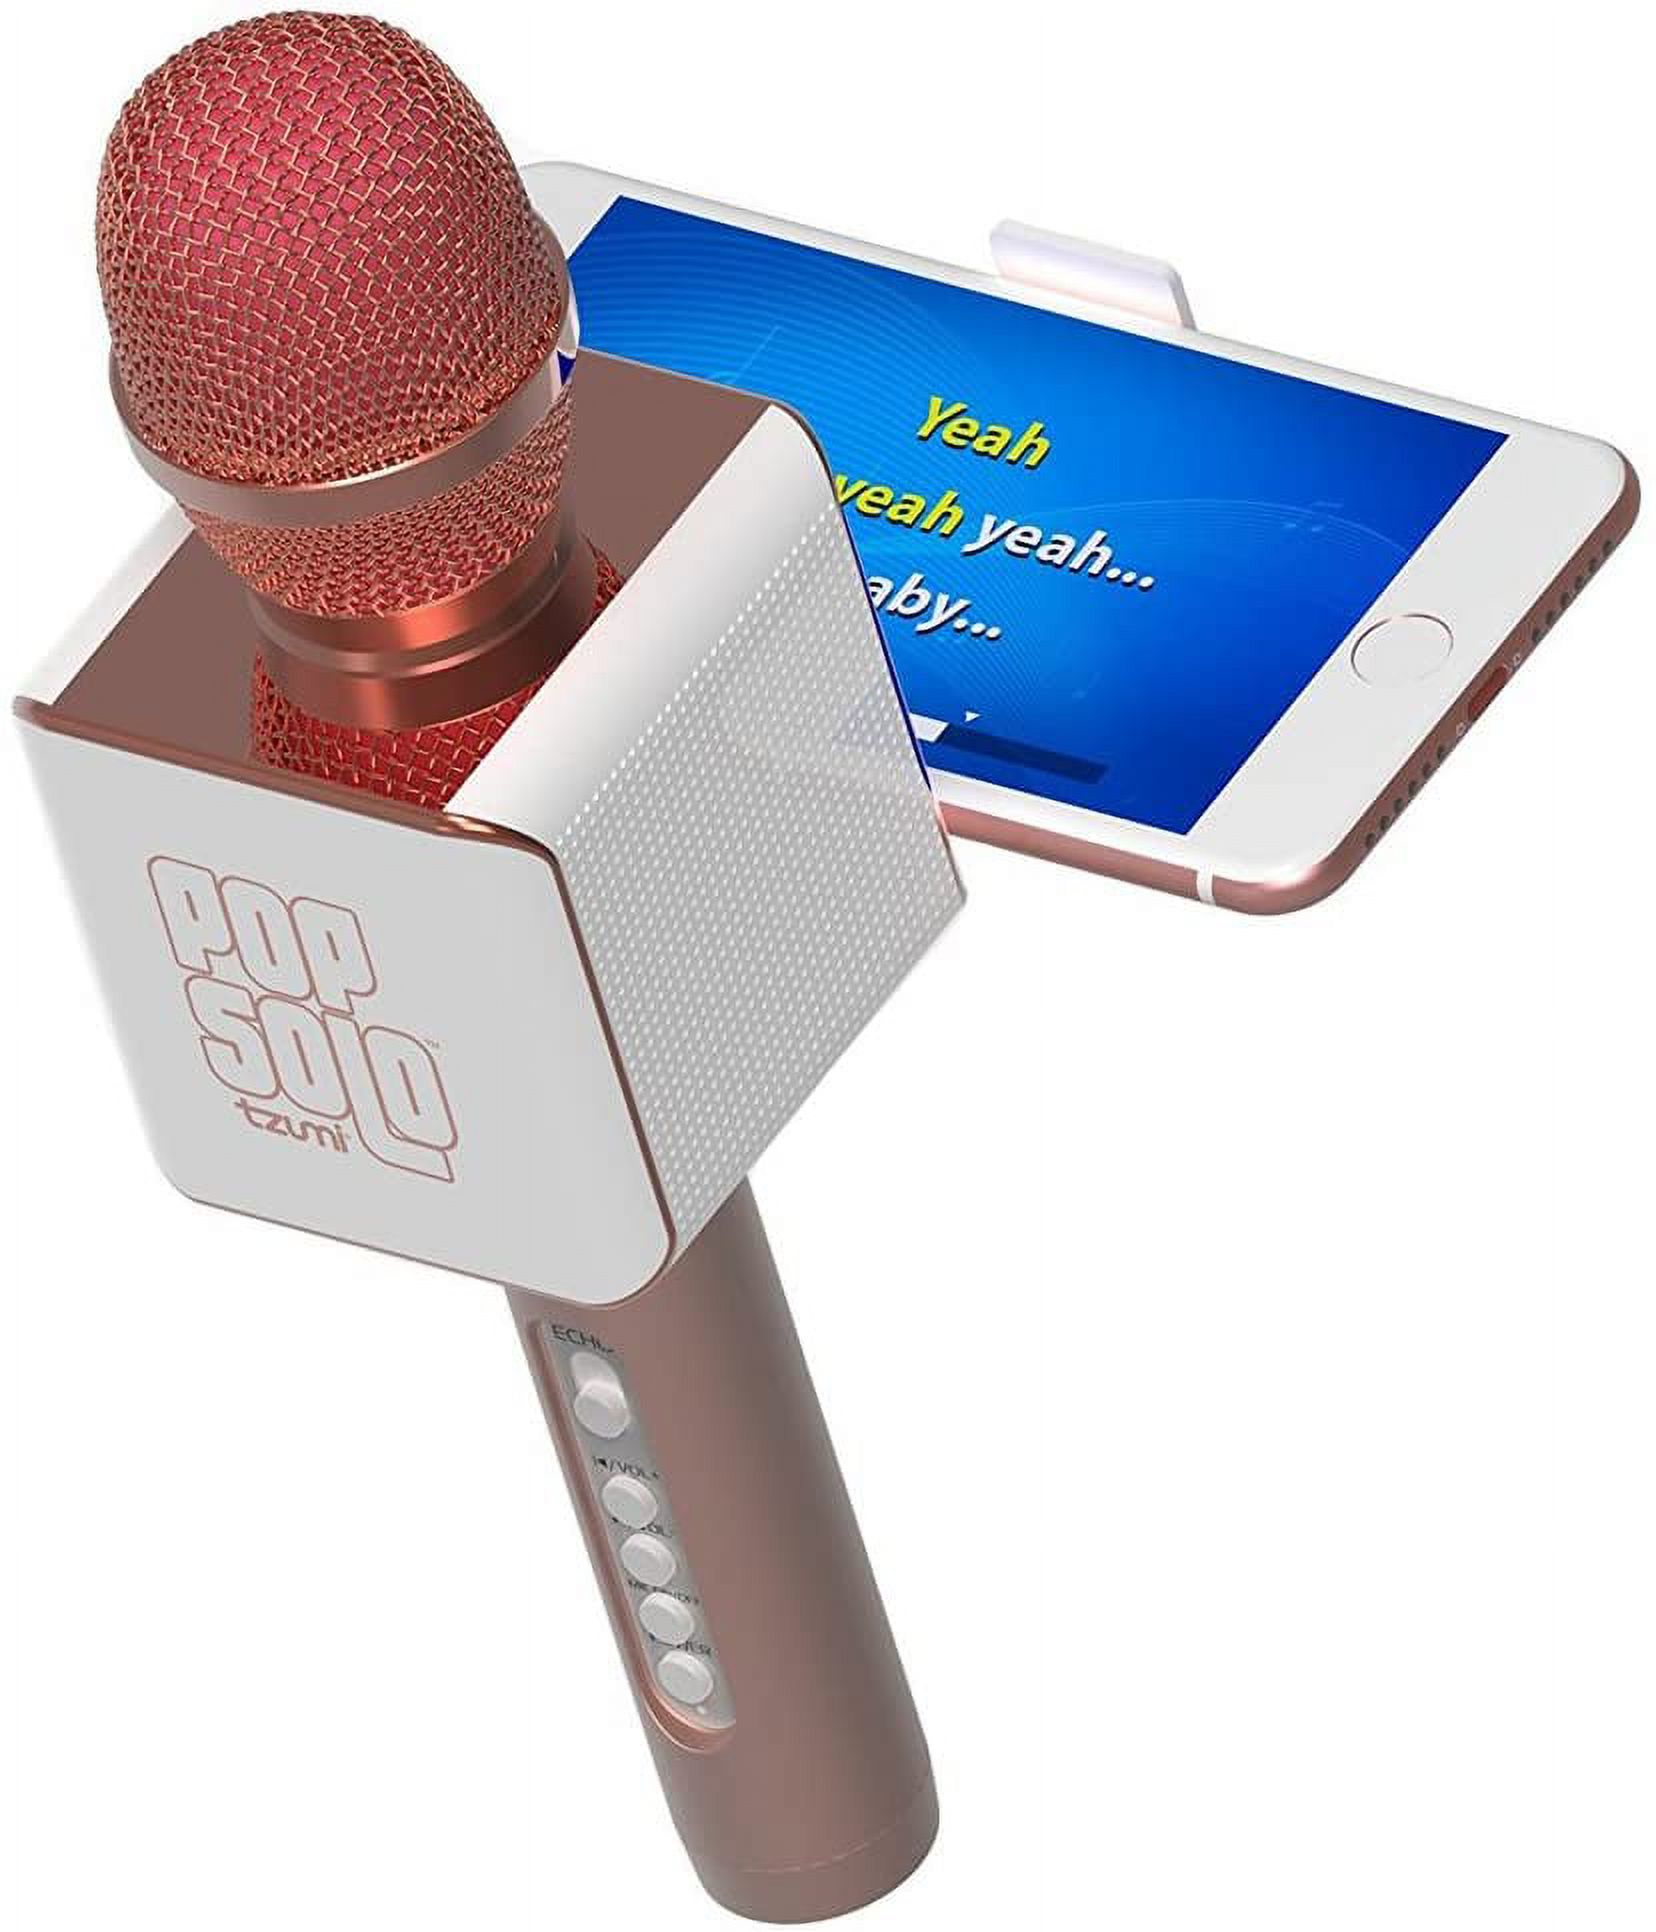 Tzumi PopSolo Wireless Bluetooth Karaoke Microphone (Rose Gold) - image 4 of 5